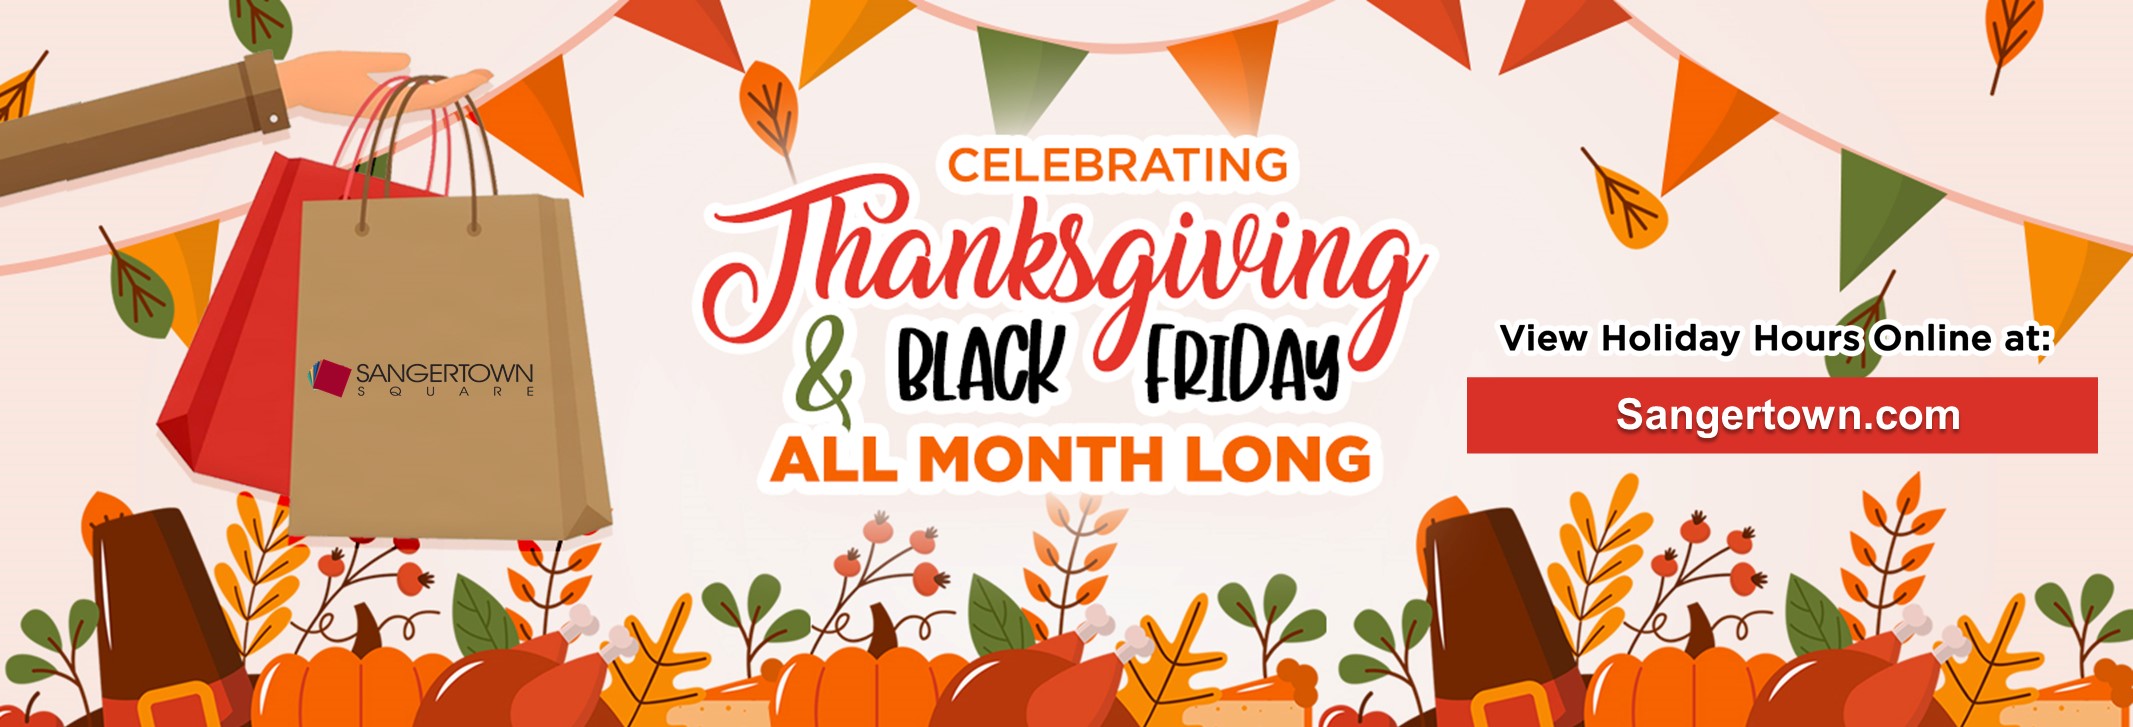 Celebrating Thanksgiving and Black Friday